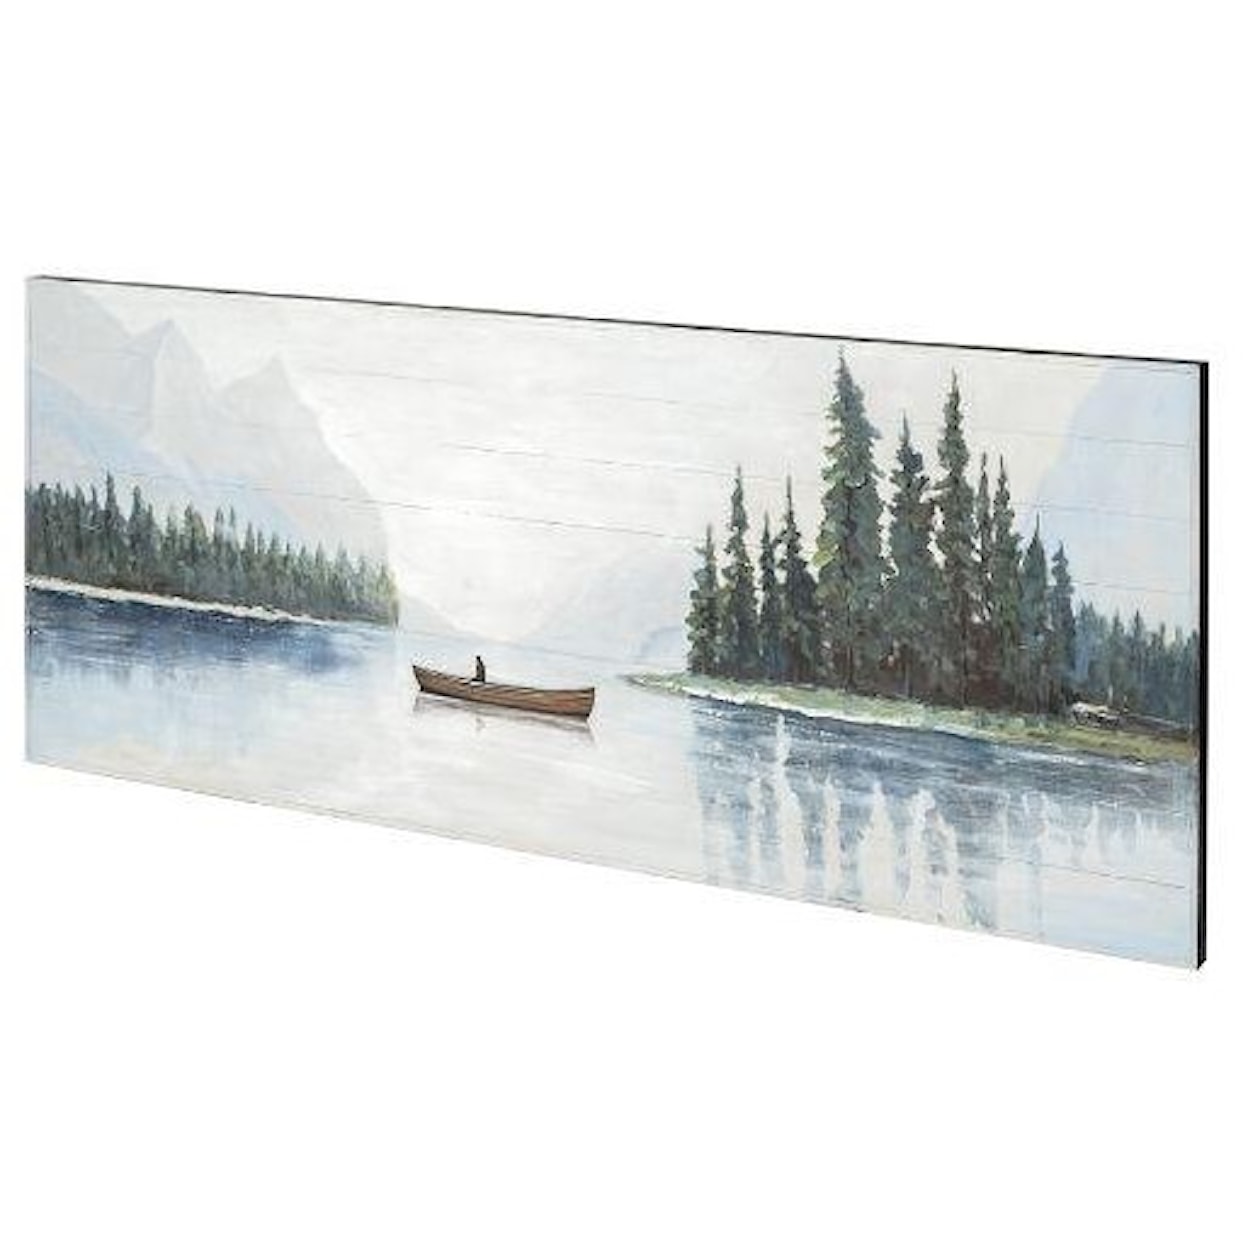 Mercana Picture Canoe On The Lake